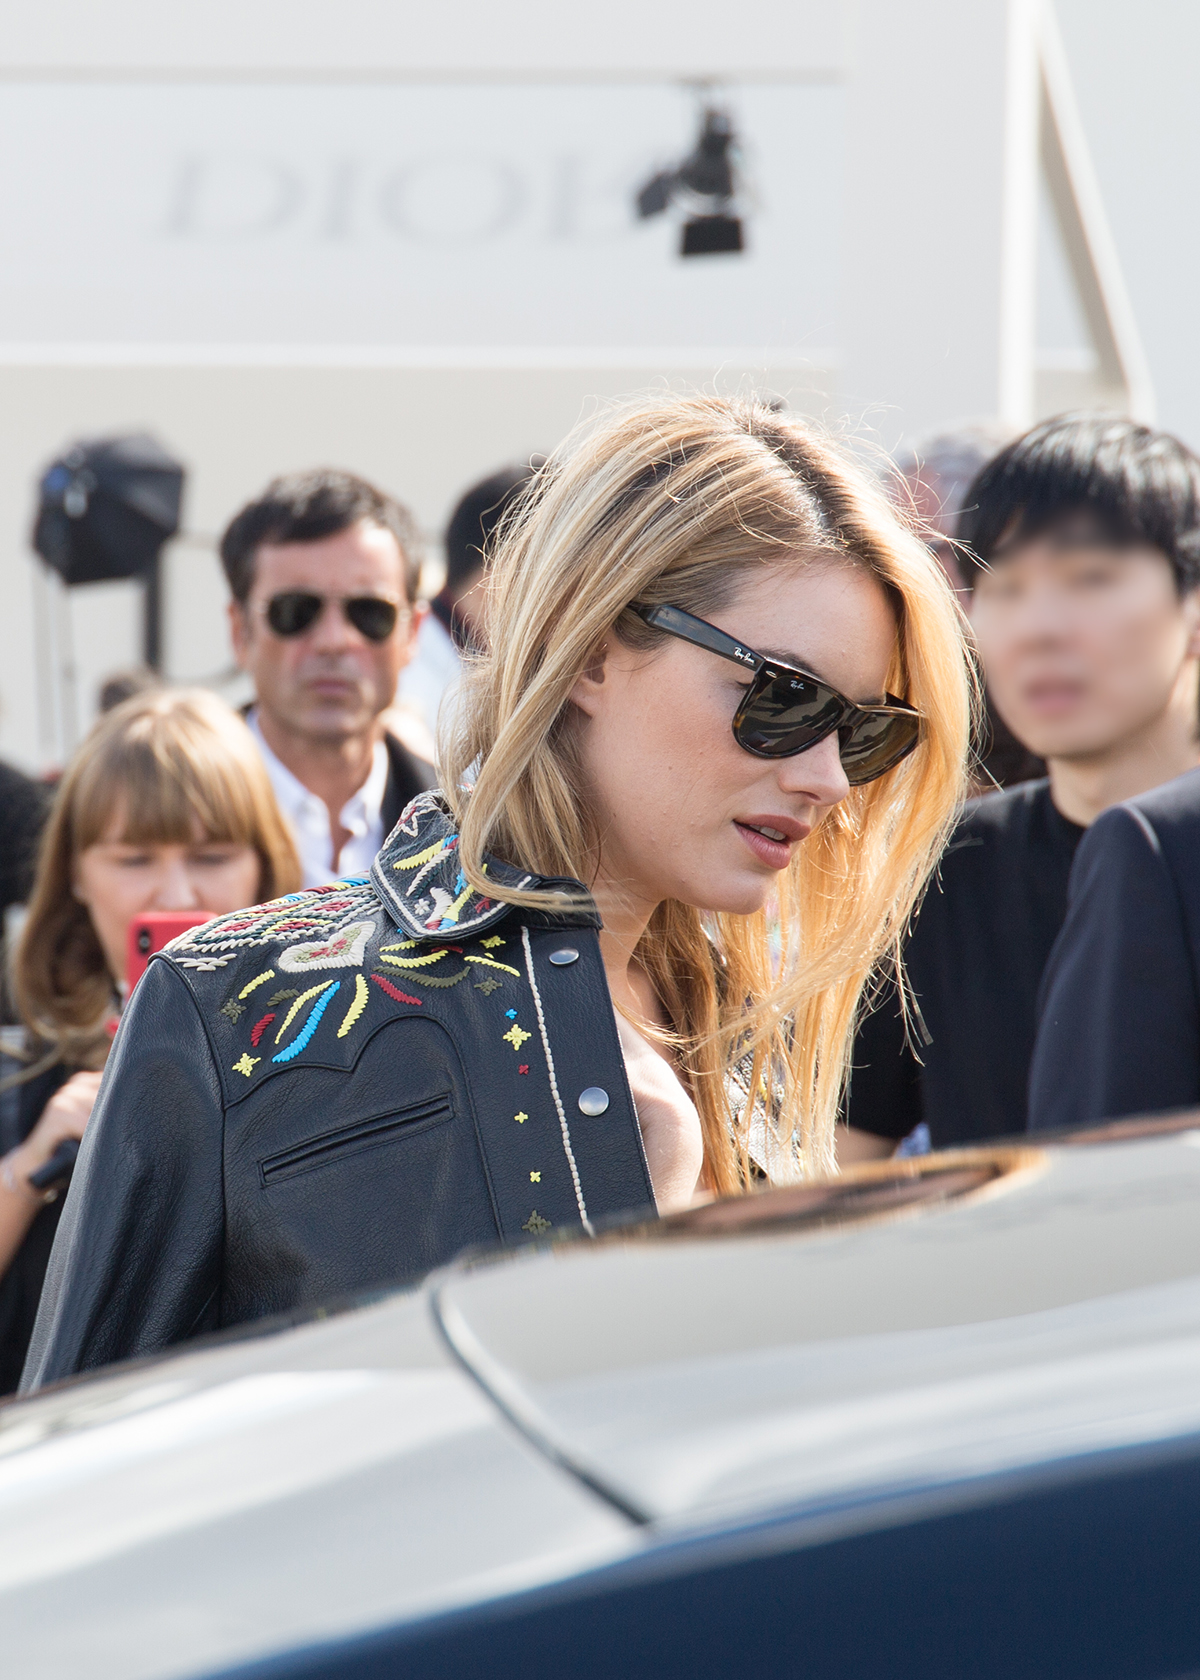 Dior Sunglasses Celebrities 2019